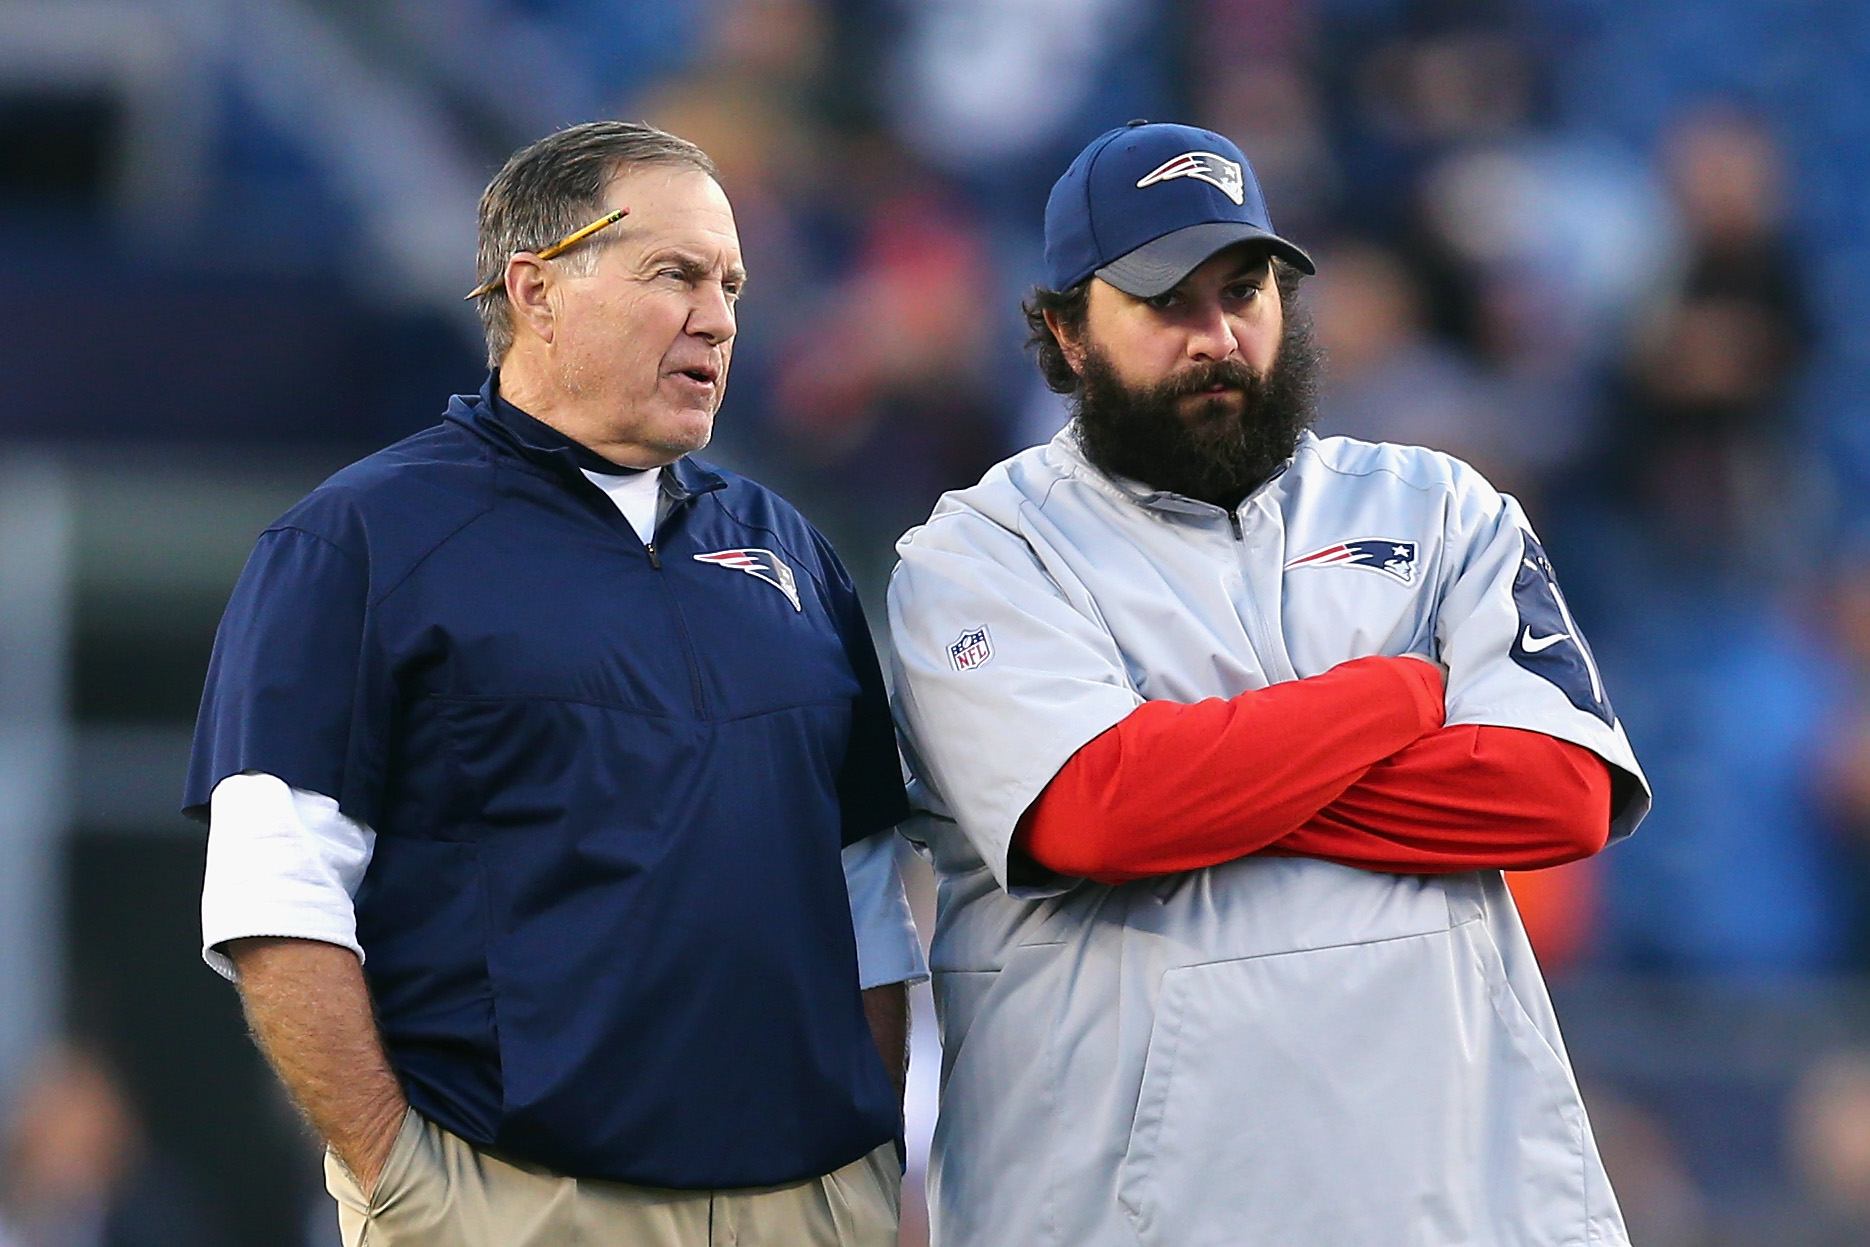 Patriots head coach Bill Belichick of the New England Patriots talks with defensive coordinator Matt Patricia.